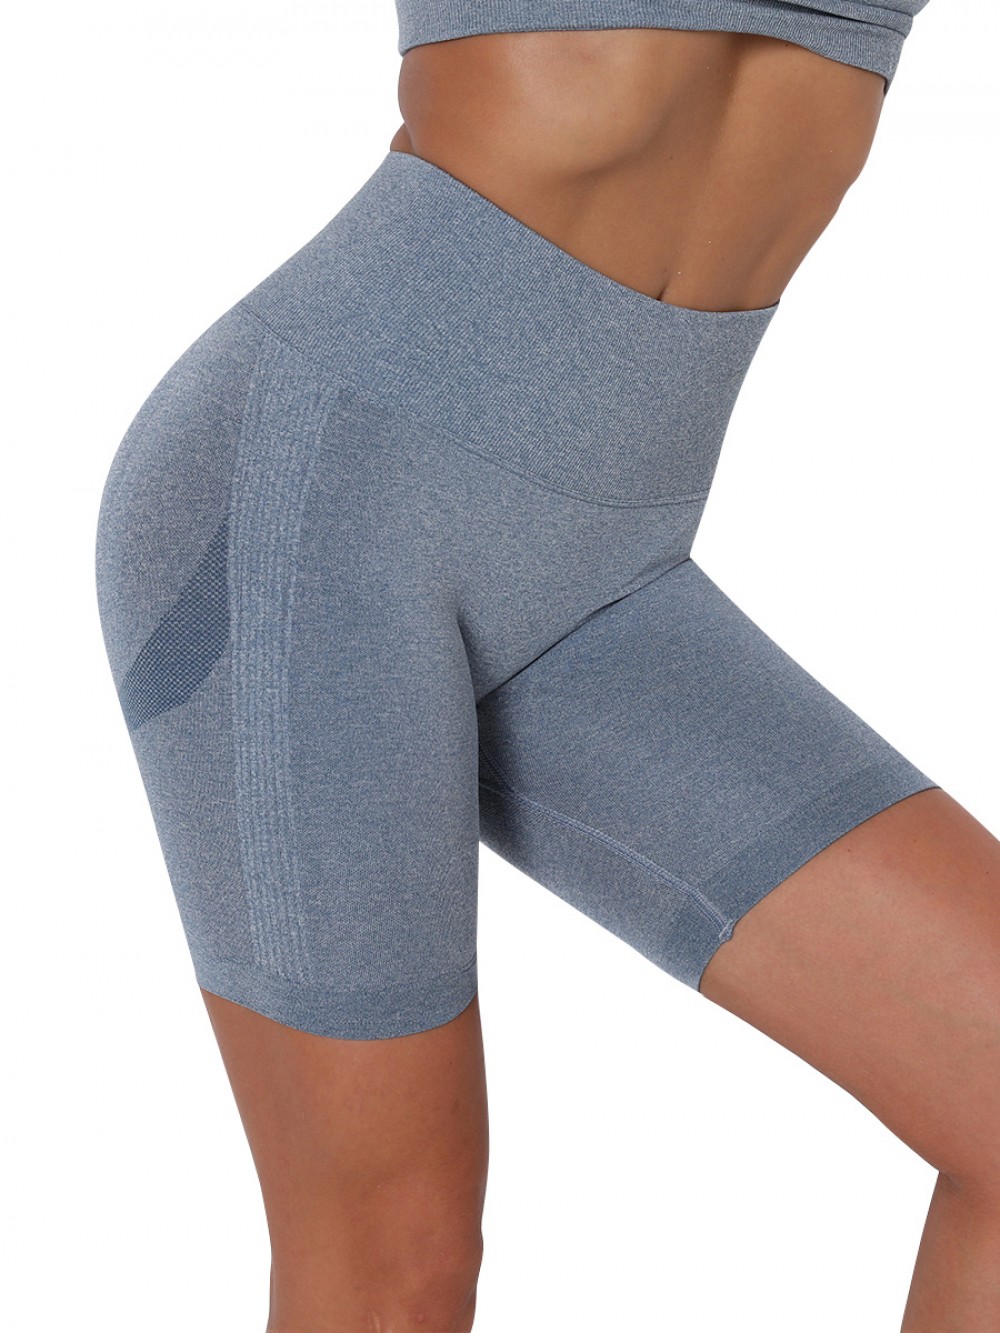 Blue Thigh Length Seamless Yoga Shorts Trend For Women